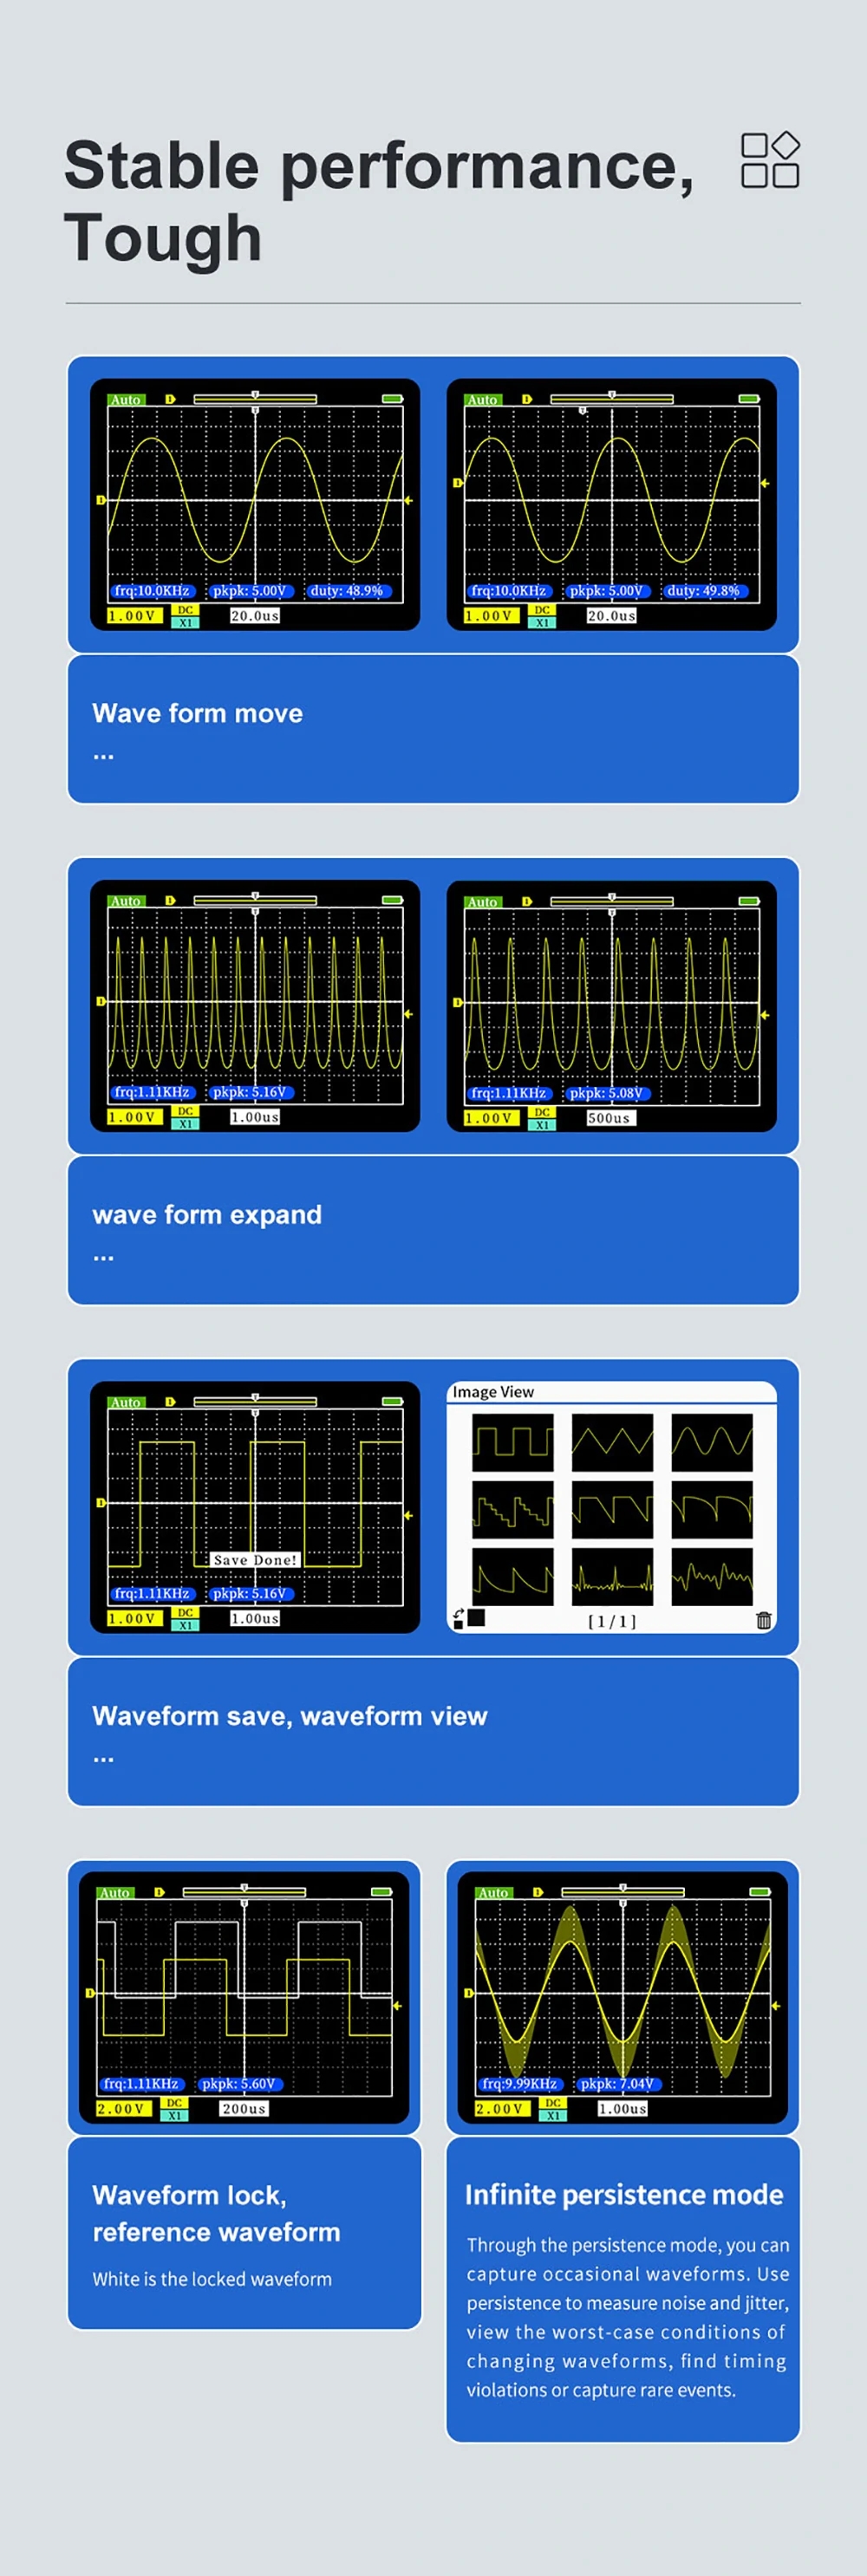 FNIRSI-1C15 Professional Digital Oscilloscope 500MS/s Sampling Rate 110MHz Analog Bandwidth Support Waveform Storage